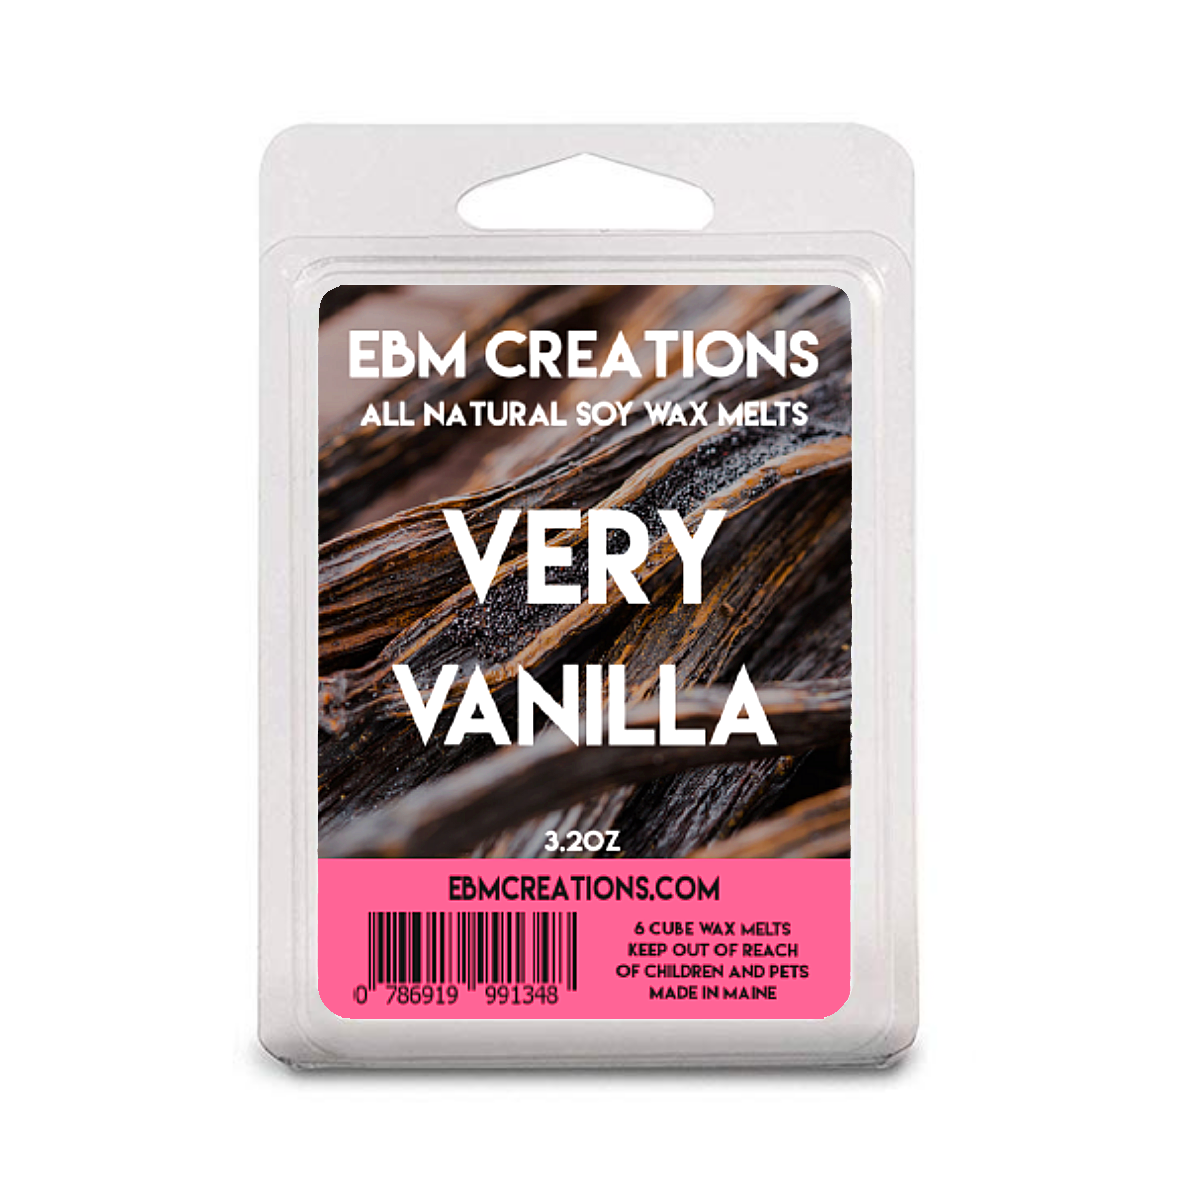 Very Vanilla - 3.2 oz Clamshell